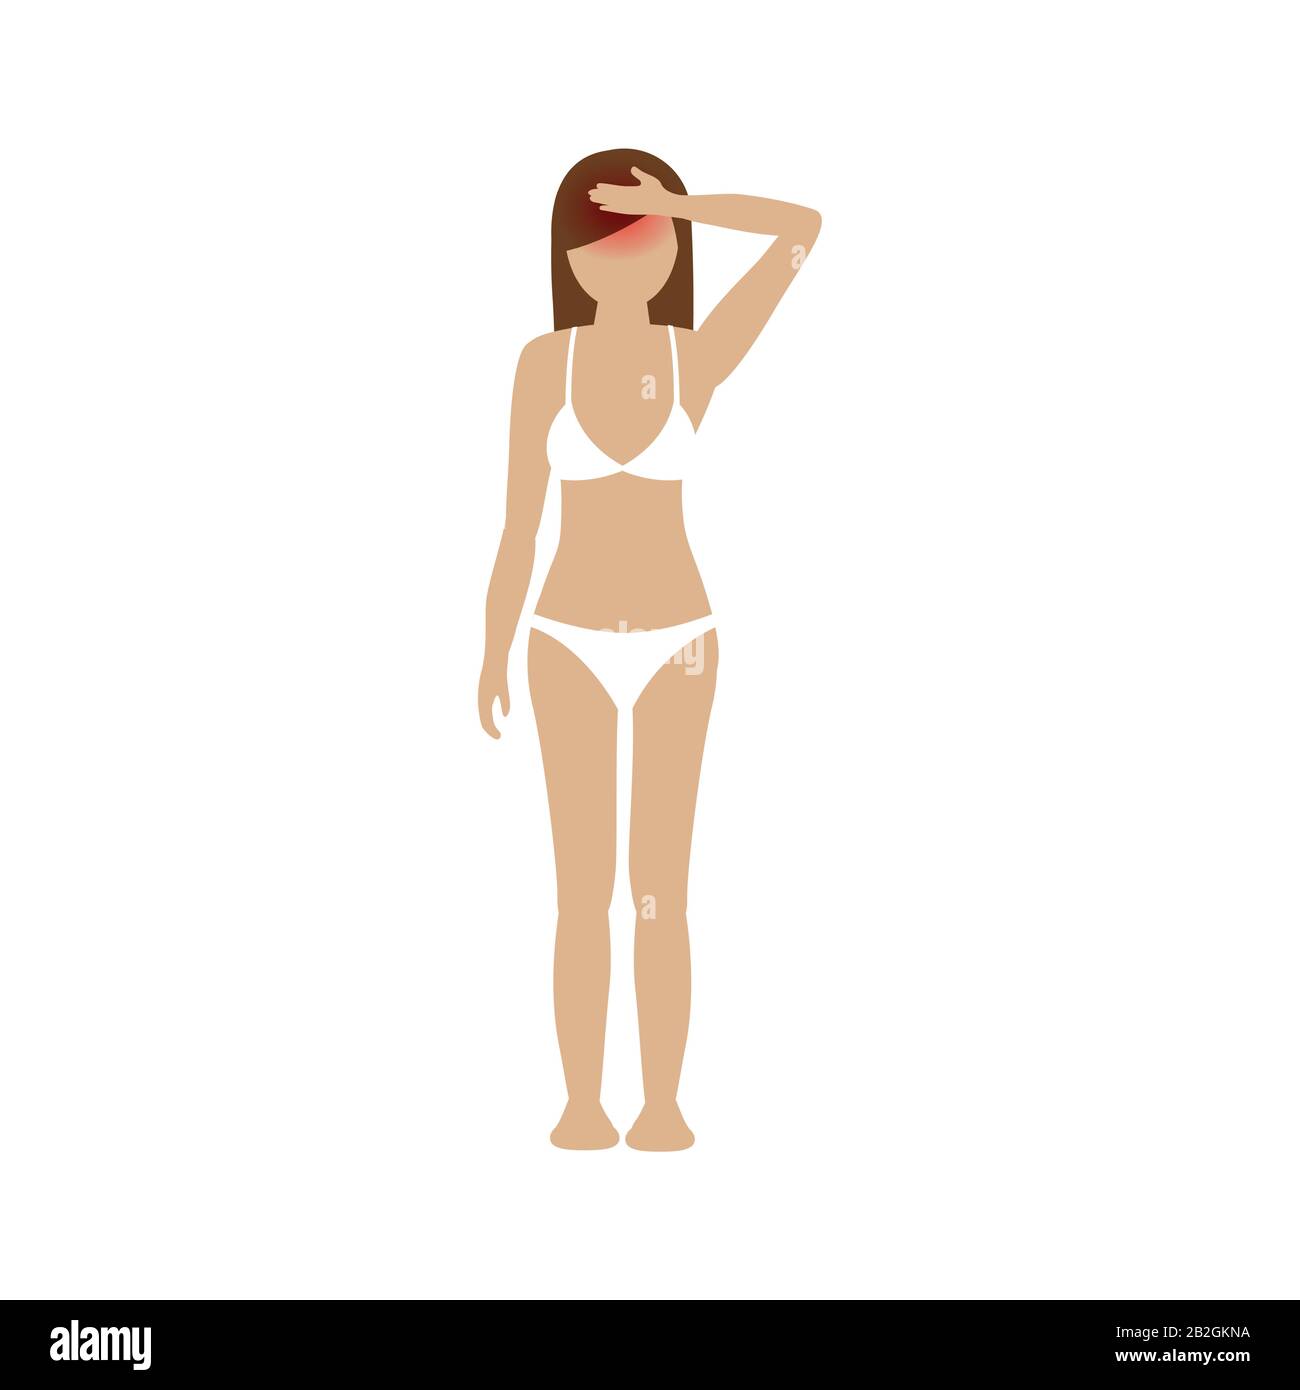 woman has a headache info graphic vector illustration EPS10 Stock Vector